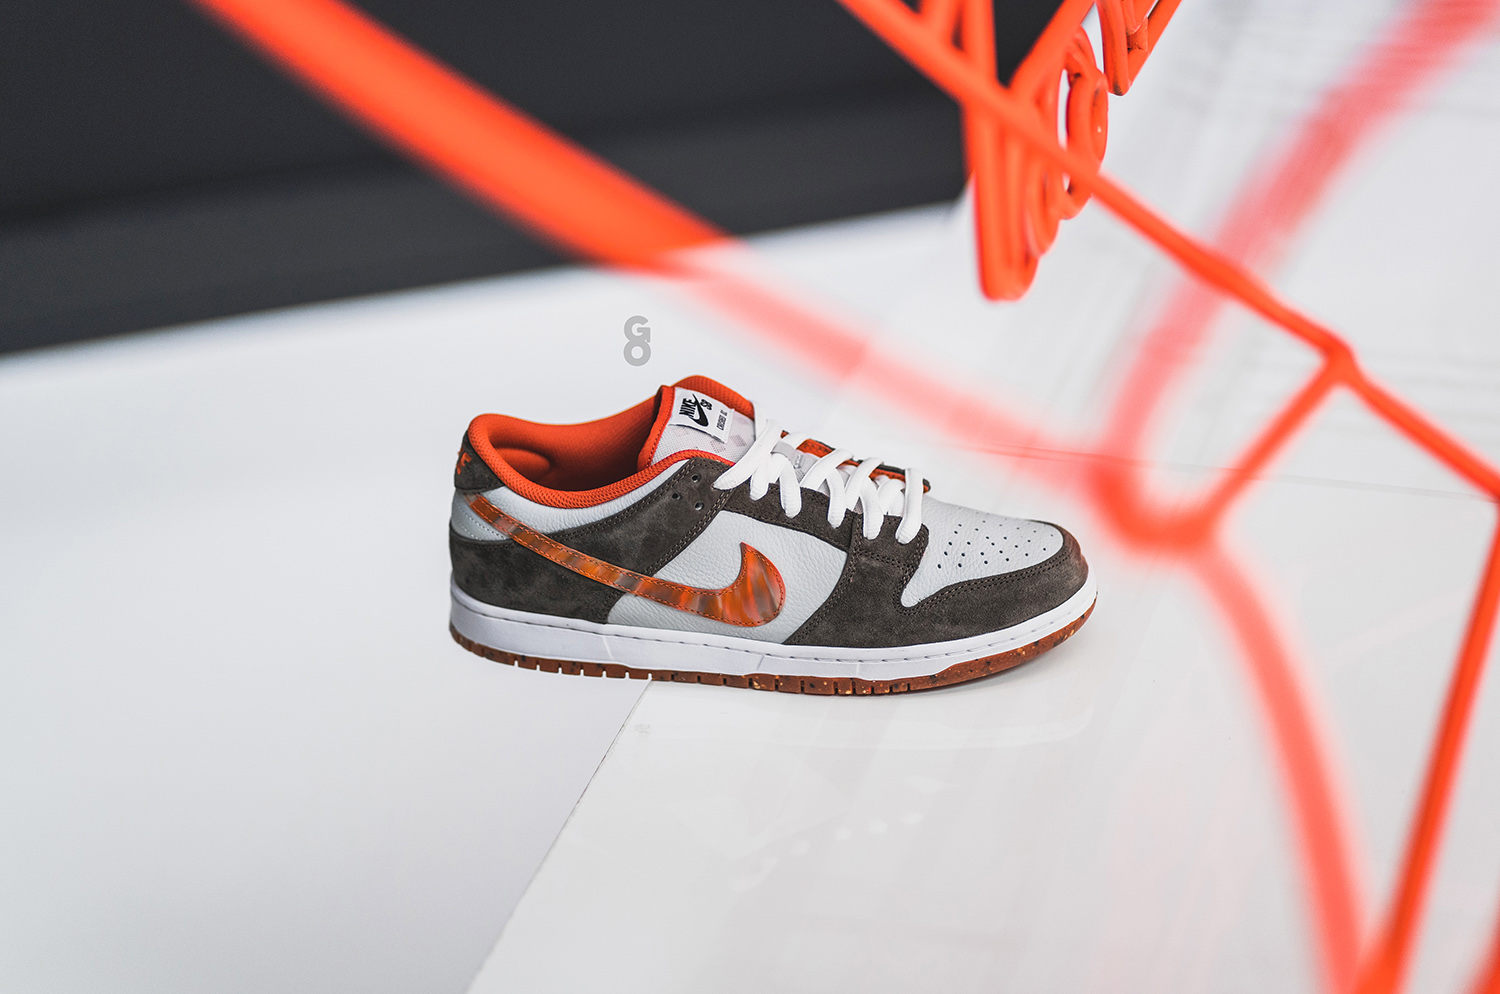 Crushed DC x Nike SB Dunk Low Pro QS “Olive Grey / Mantra Orange